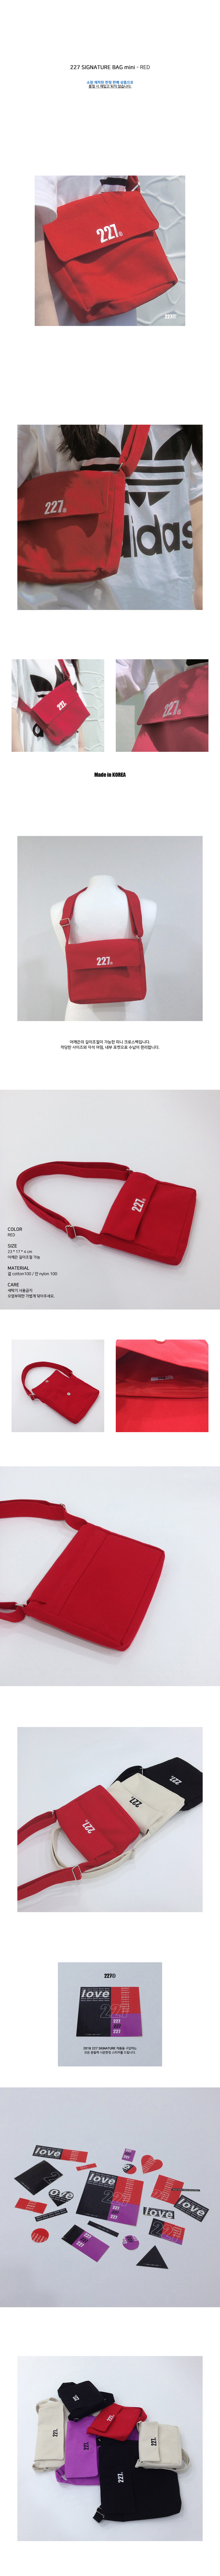 227 SIGNATURE BAG mini - RED 55,000원 - 227(이이칠) 패션잡화, 가방, 크로스백, 패브릭 바보사랑 227 SIGNATURE BAG mini - RED 55,000원 - 227(이이칠) 패션잡화, 가방, 크로스백, 패브릭 바보사랑